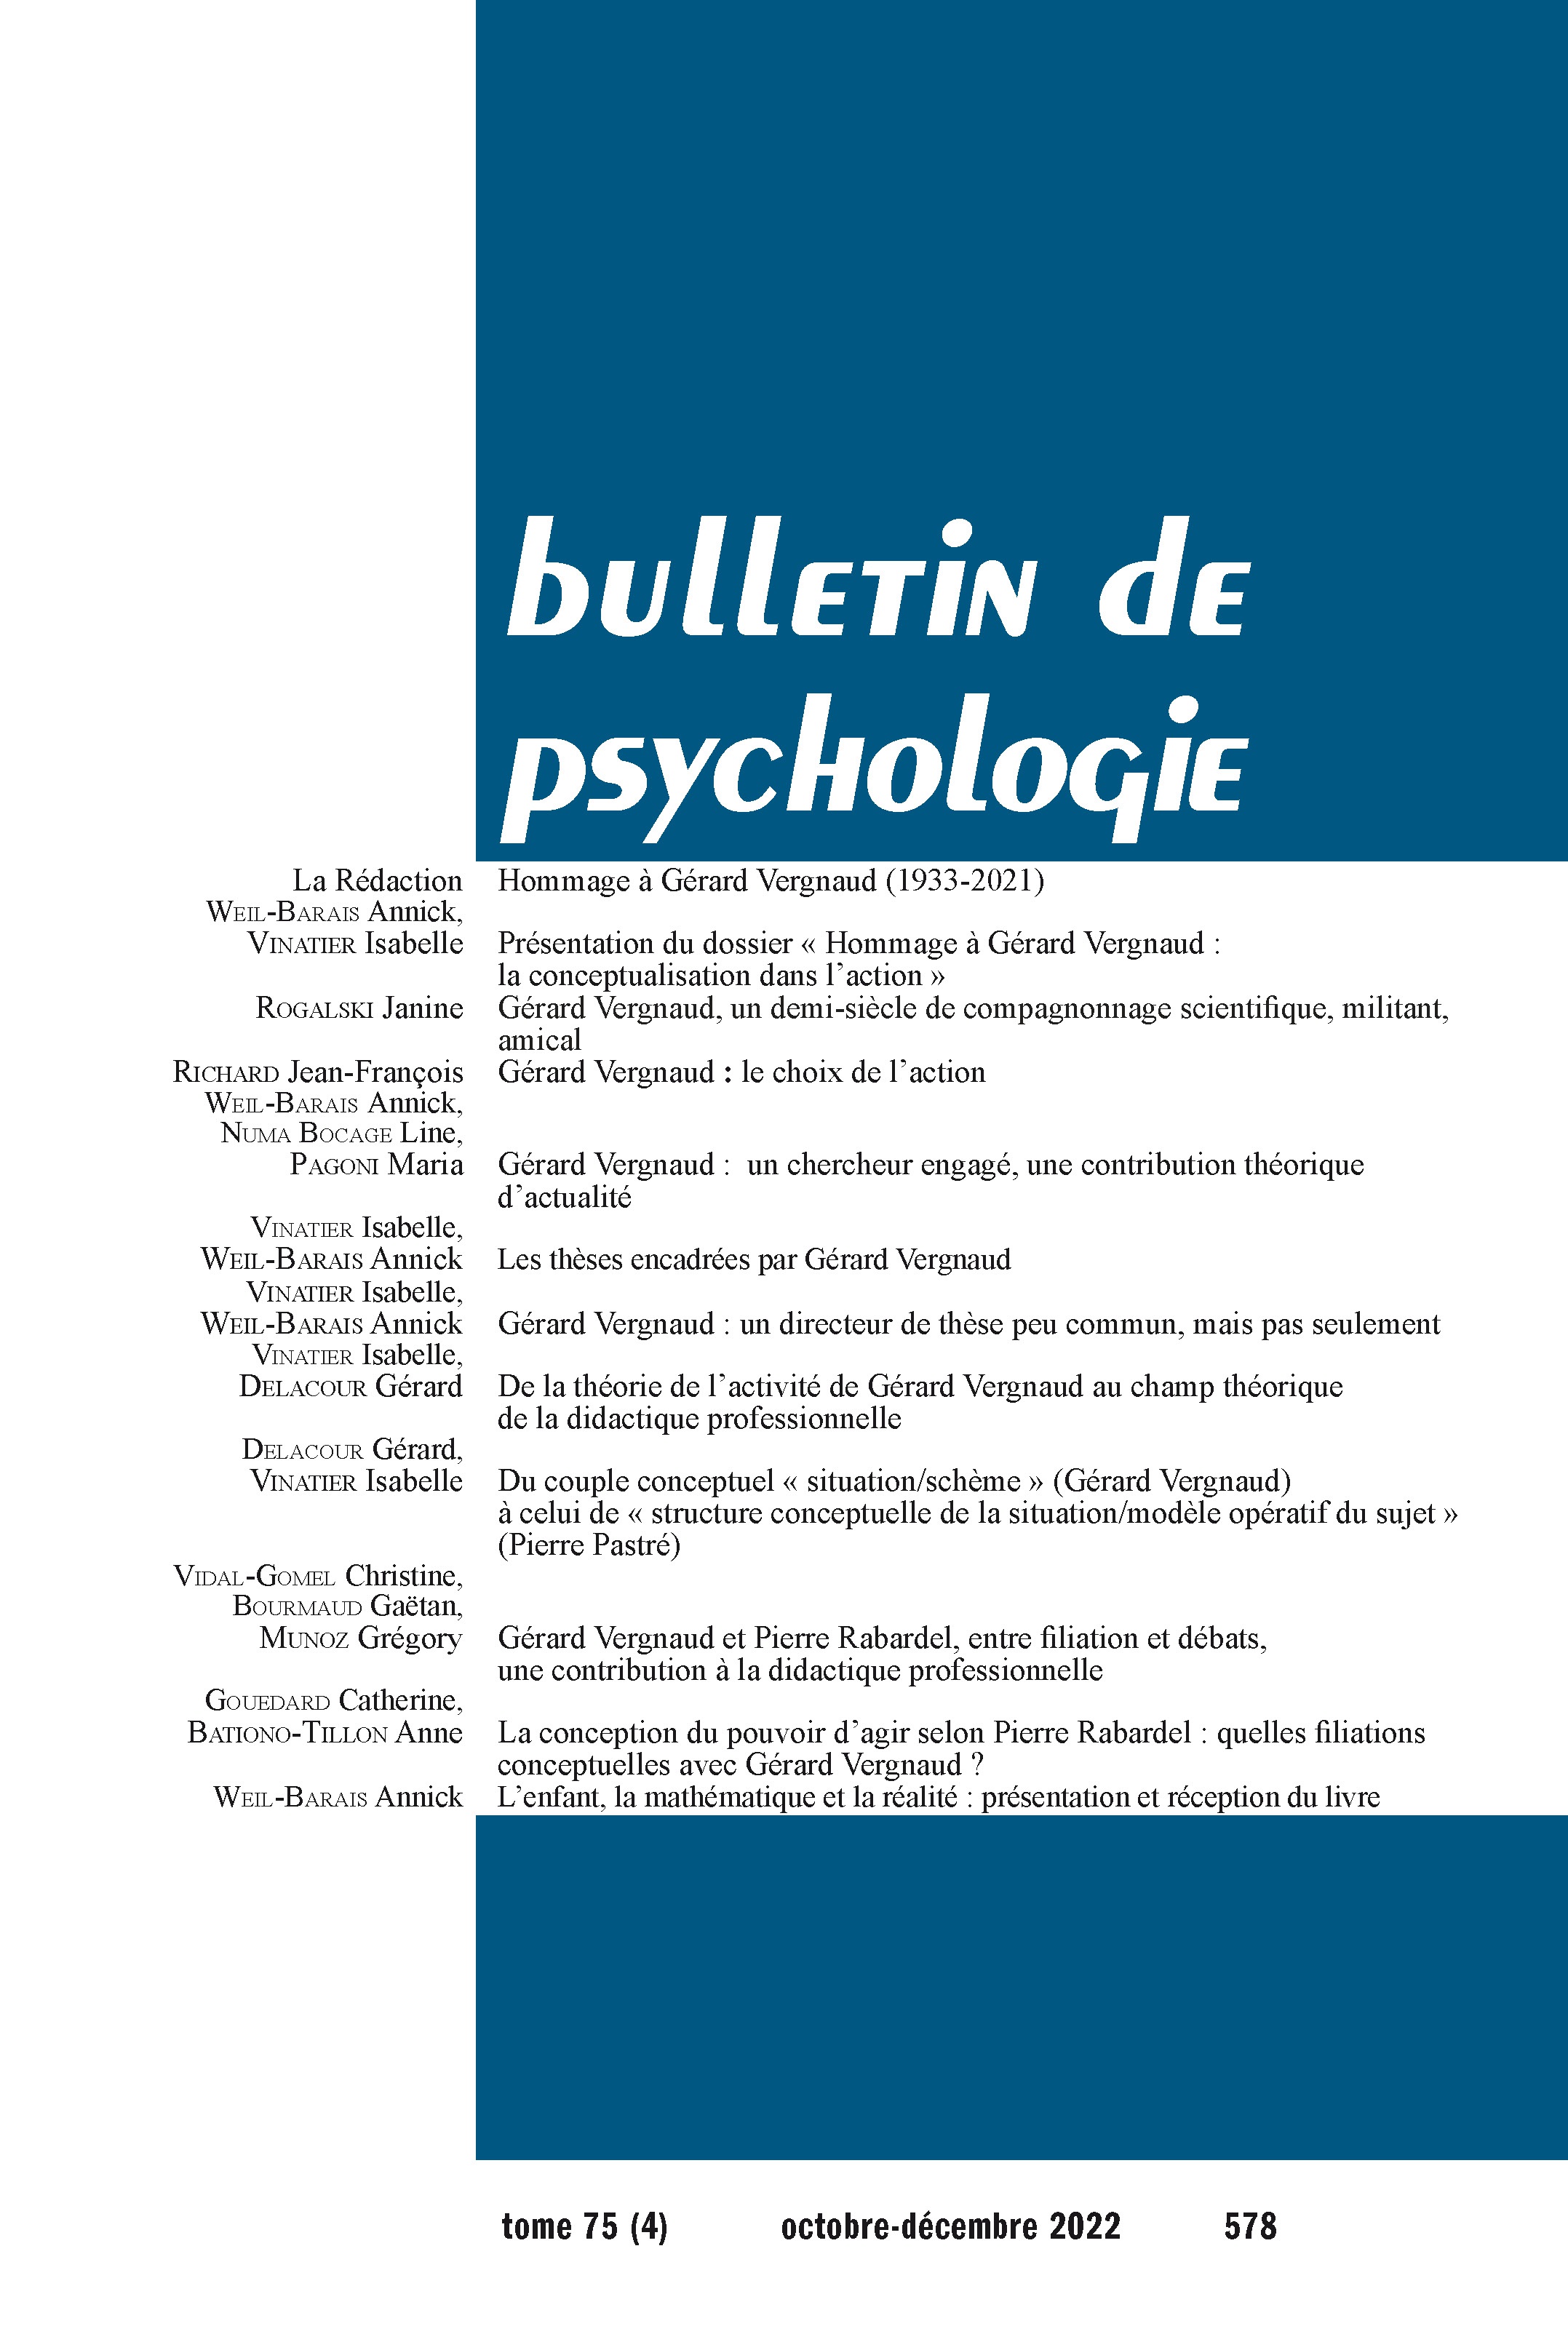 Bulletin de psychologie n°578